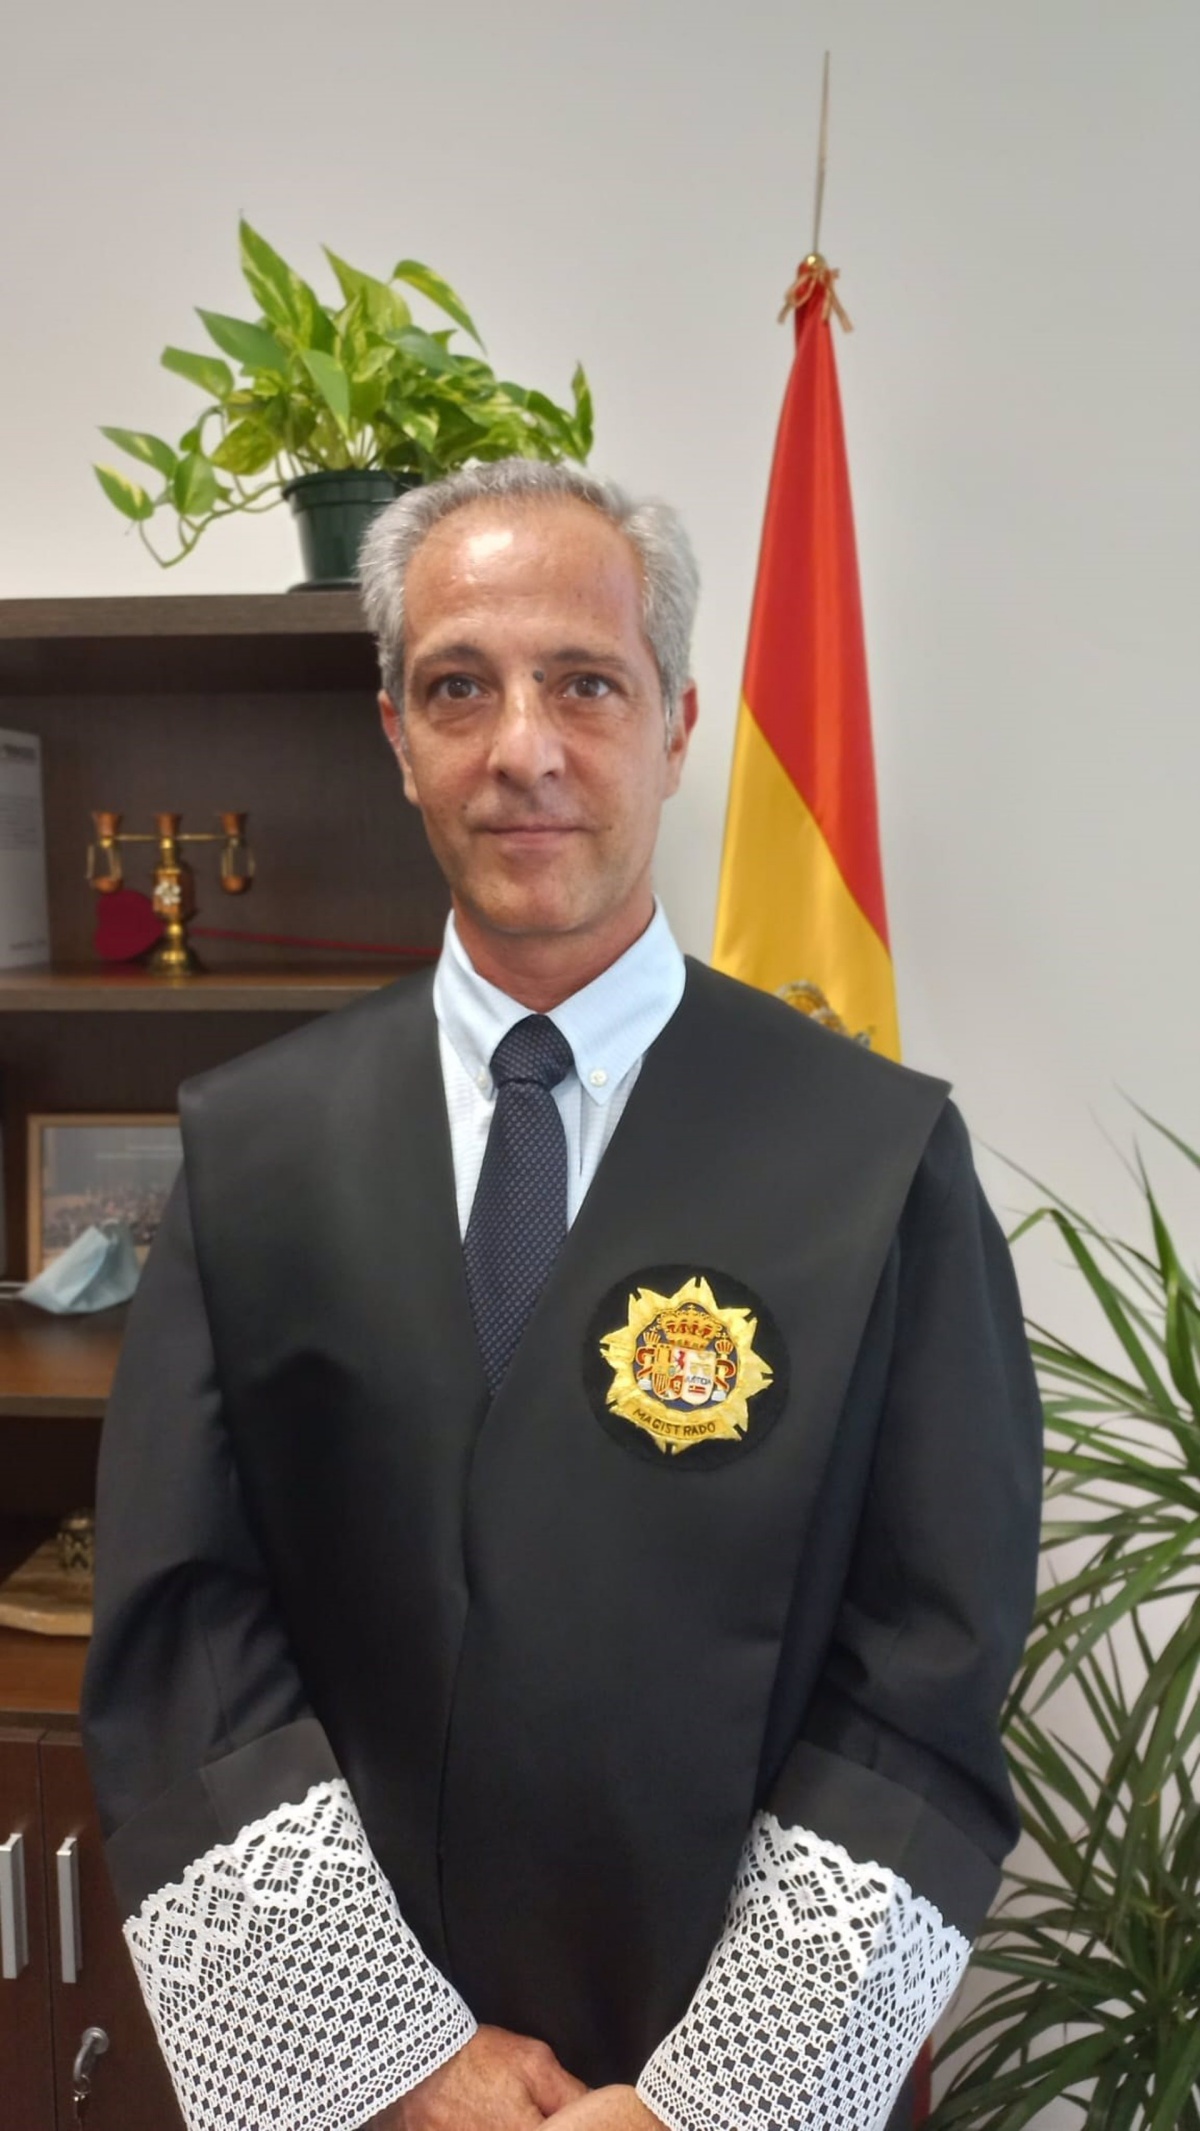 El magistrado Pedro Benito López Fernández/ TSJCM